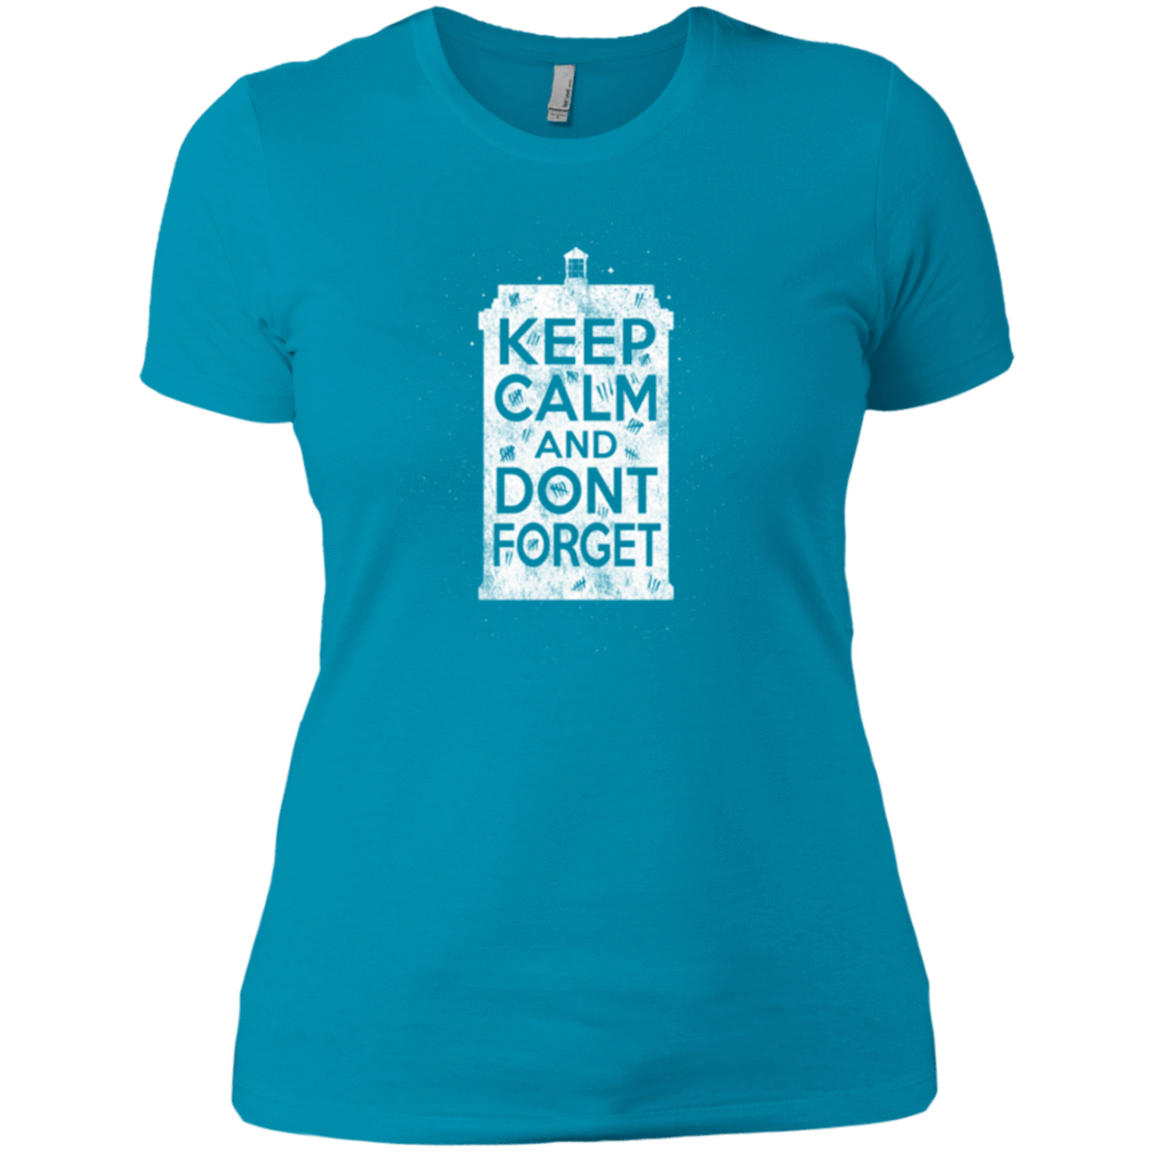 T-Shirts Turquoise / X-Small KCDF Tardis Women's Premium T-Shirt